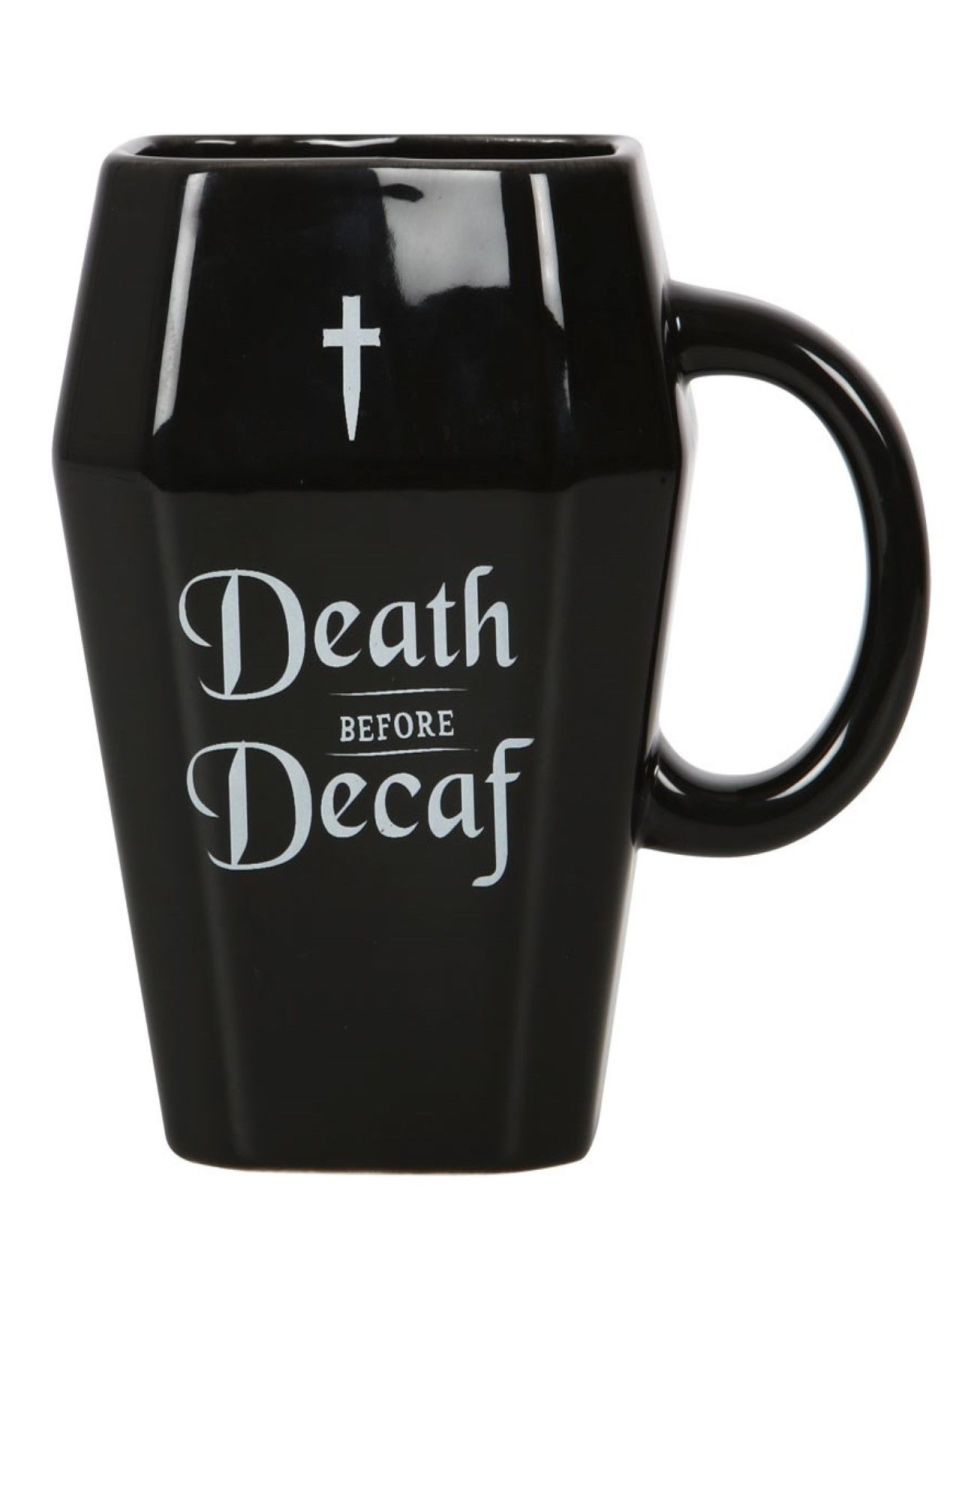 Death before decaf mug RRP £14.99